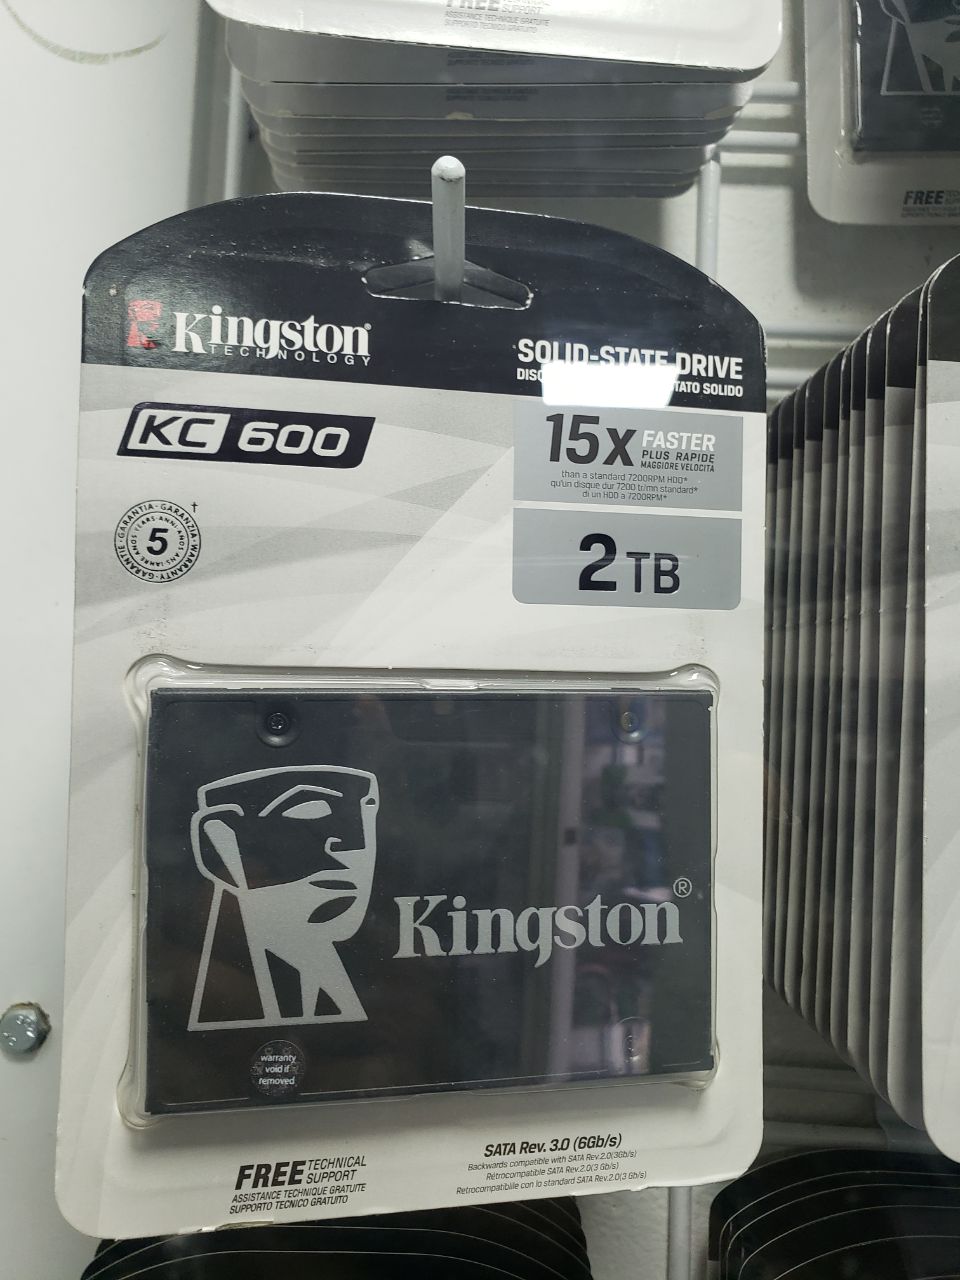 DISCO SSD 2TB KINGSTON EN ESPECIAL LEER DESCRIPCION Foto 7169686-1.jpg